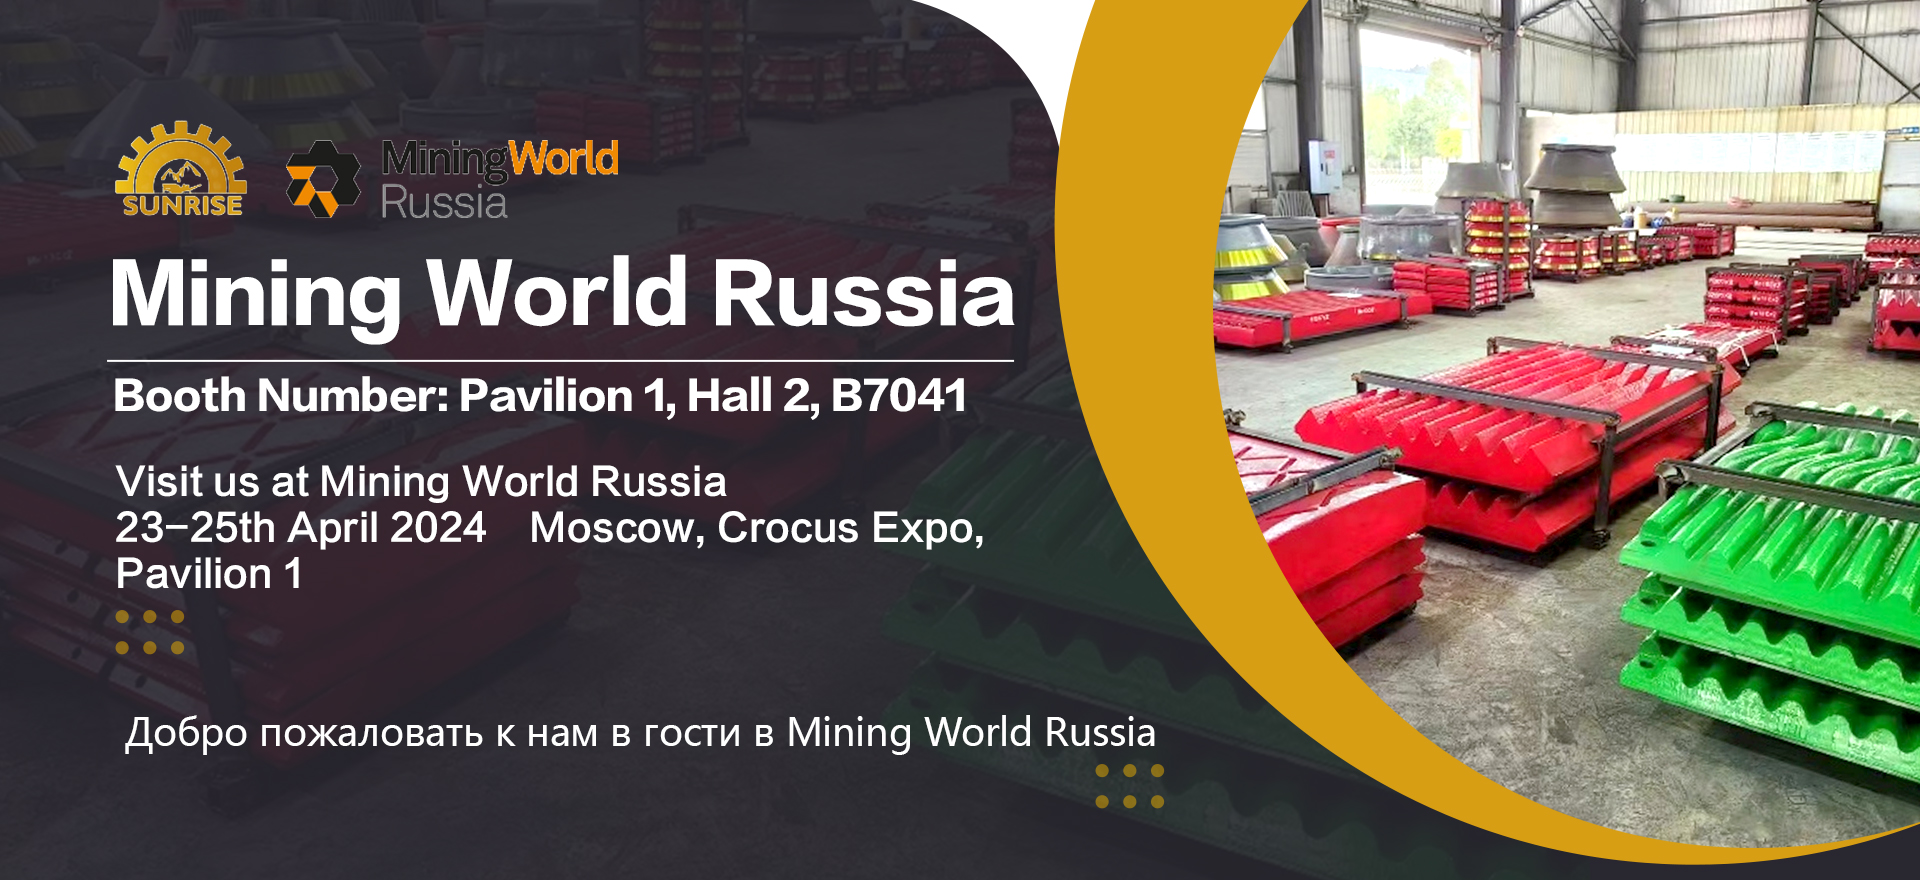 Sunrise Mining World Rusland